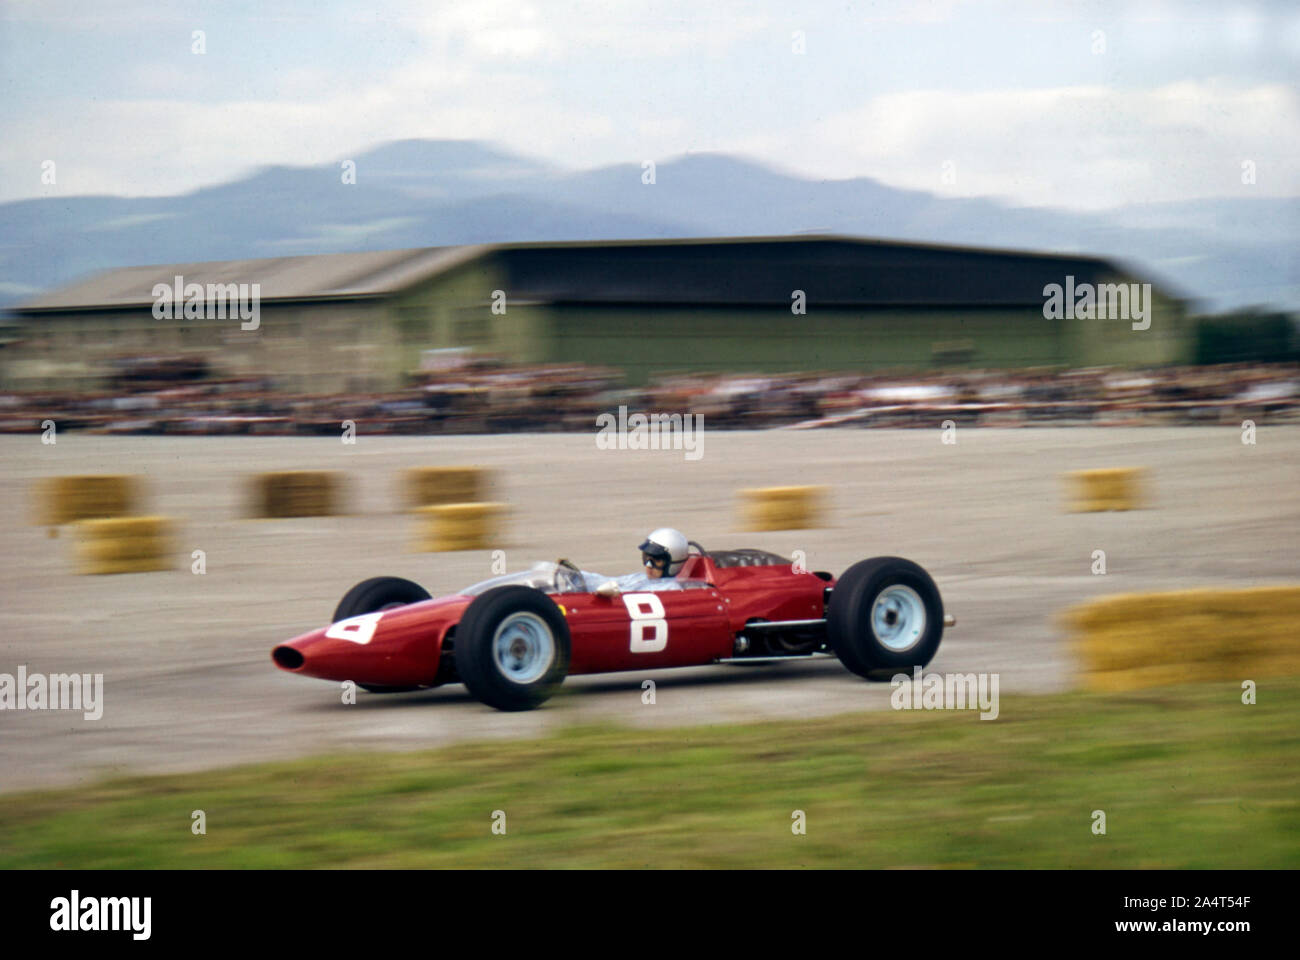 1964 Ferrari 158, Lorenzo Bandini, Österreichischen Grand Prix Sieger. Stockfoto